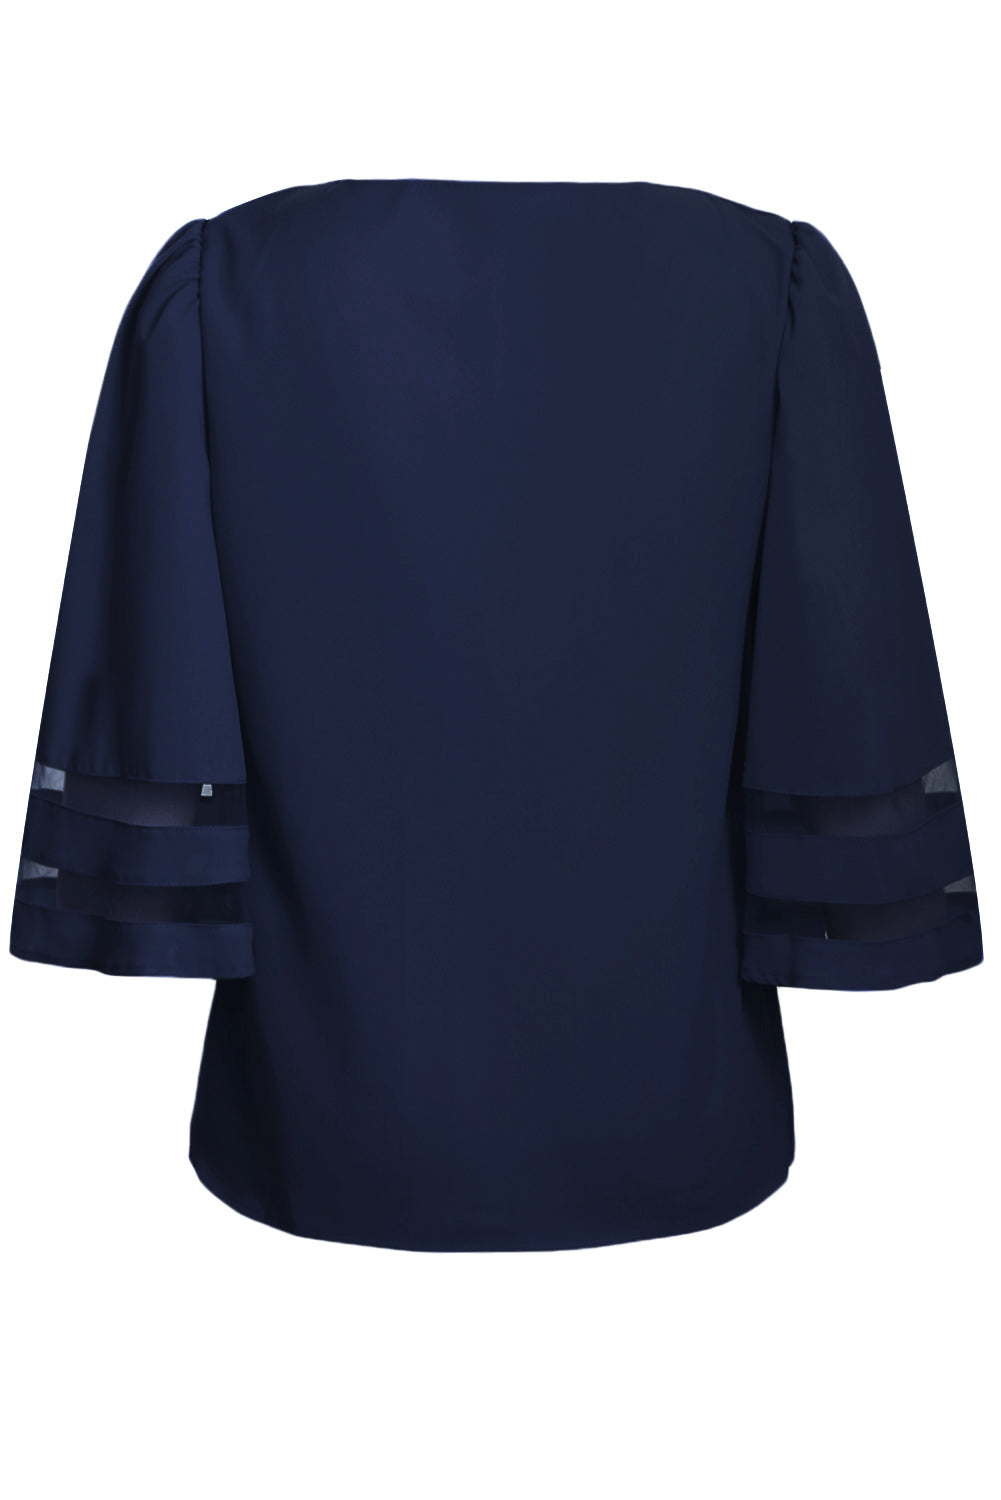 Navy Blue Flare Sleeve V Neck Loose Women's Chiffon Blouse MB251204-5 ...